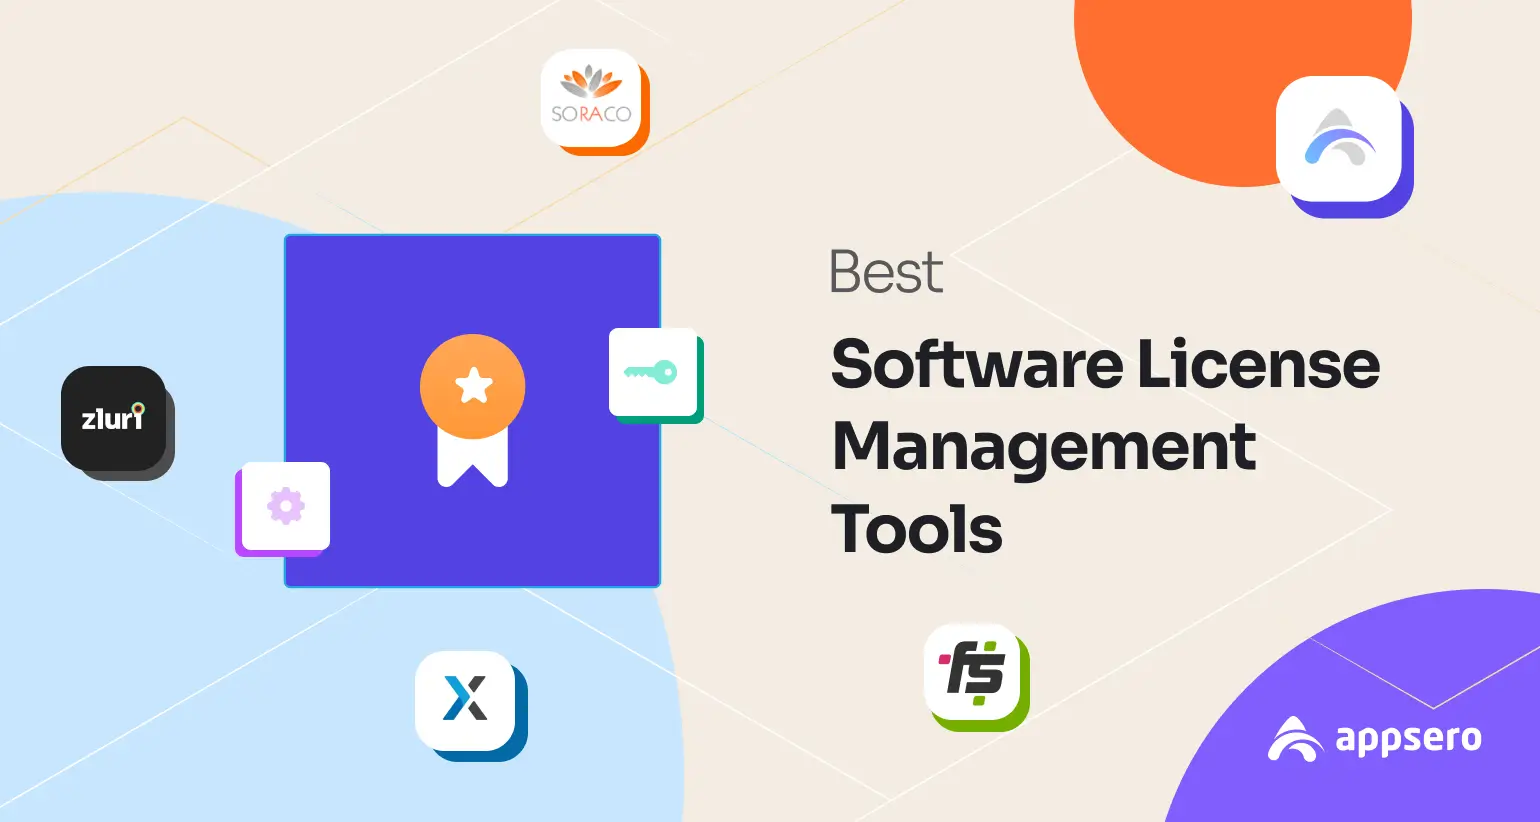 Best Software License Management Tools